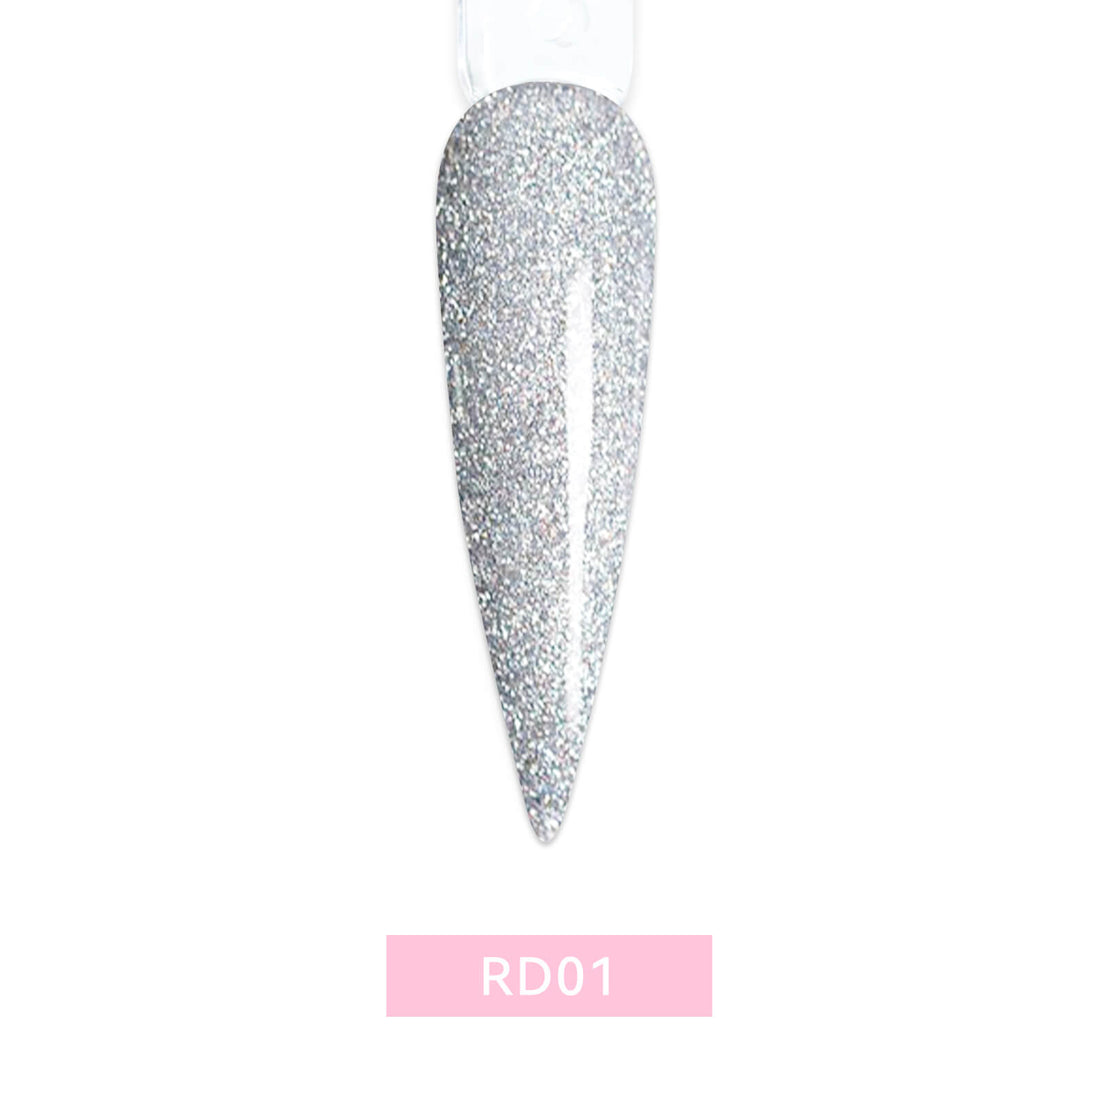 reflective-diamond-glitter-gel-polish-RD01-flash-off